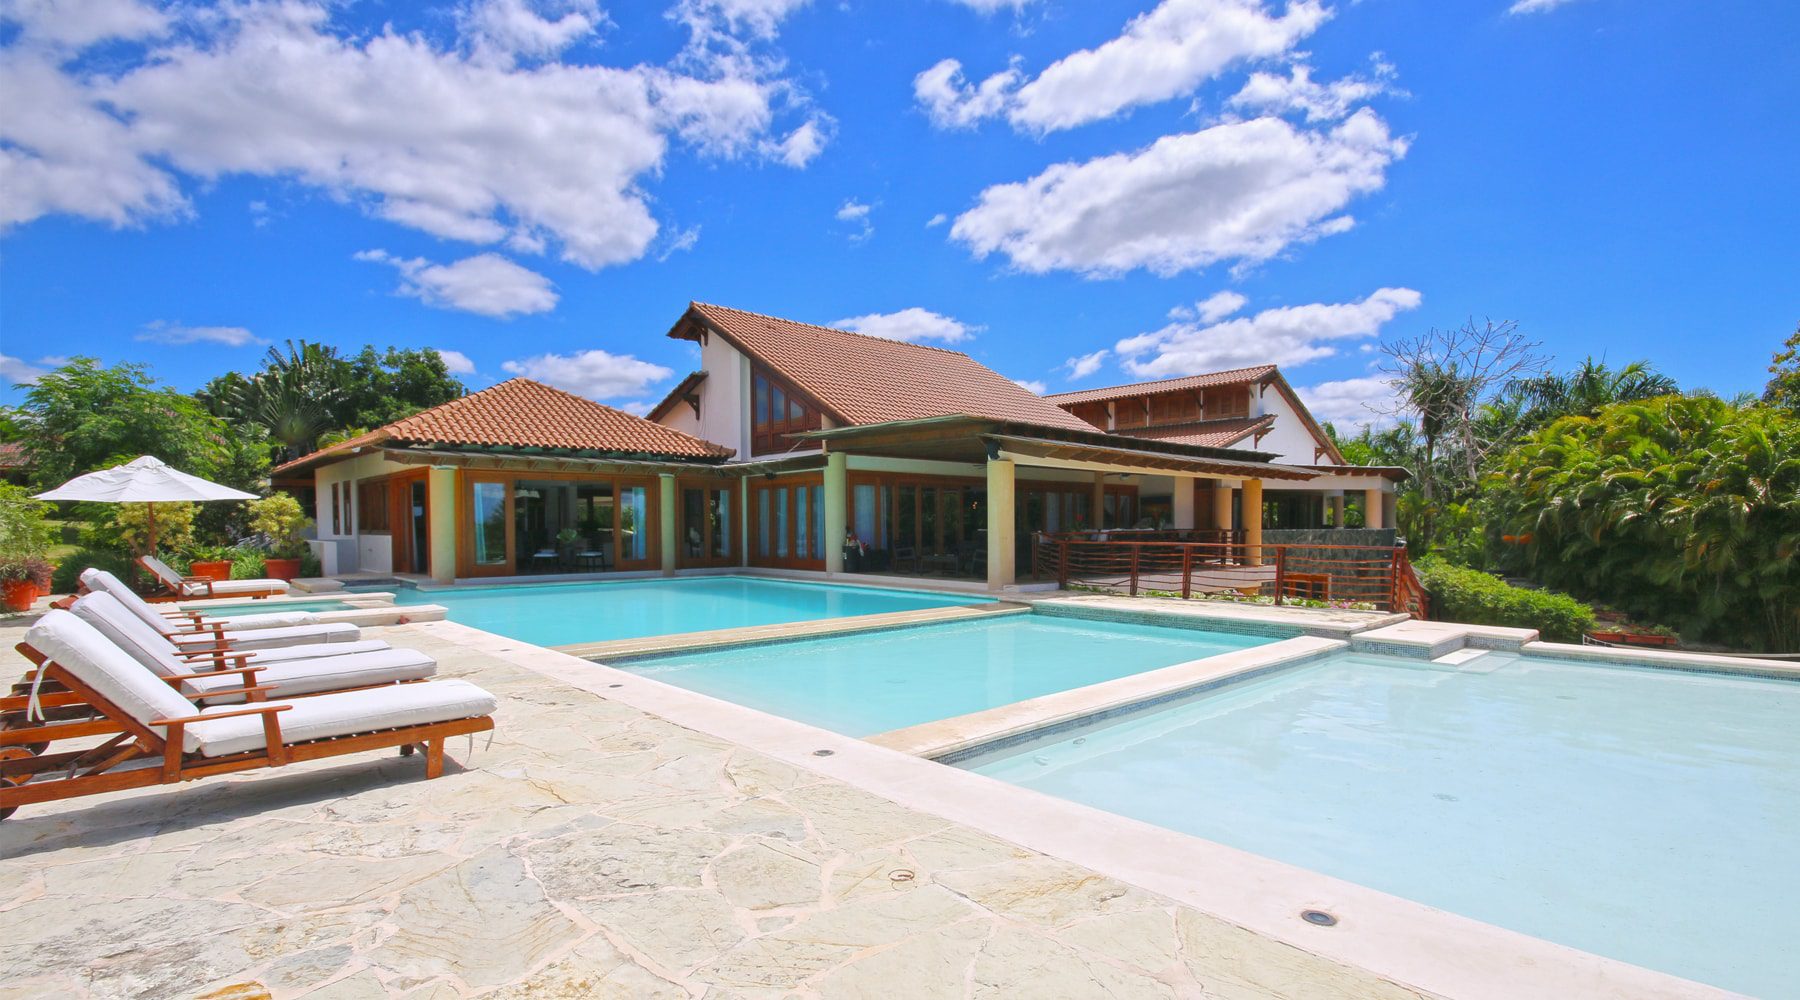 Villa Radiante Private Pool and Lounge Area